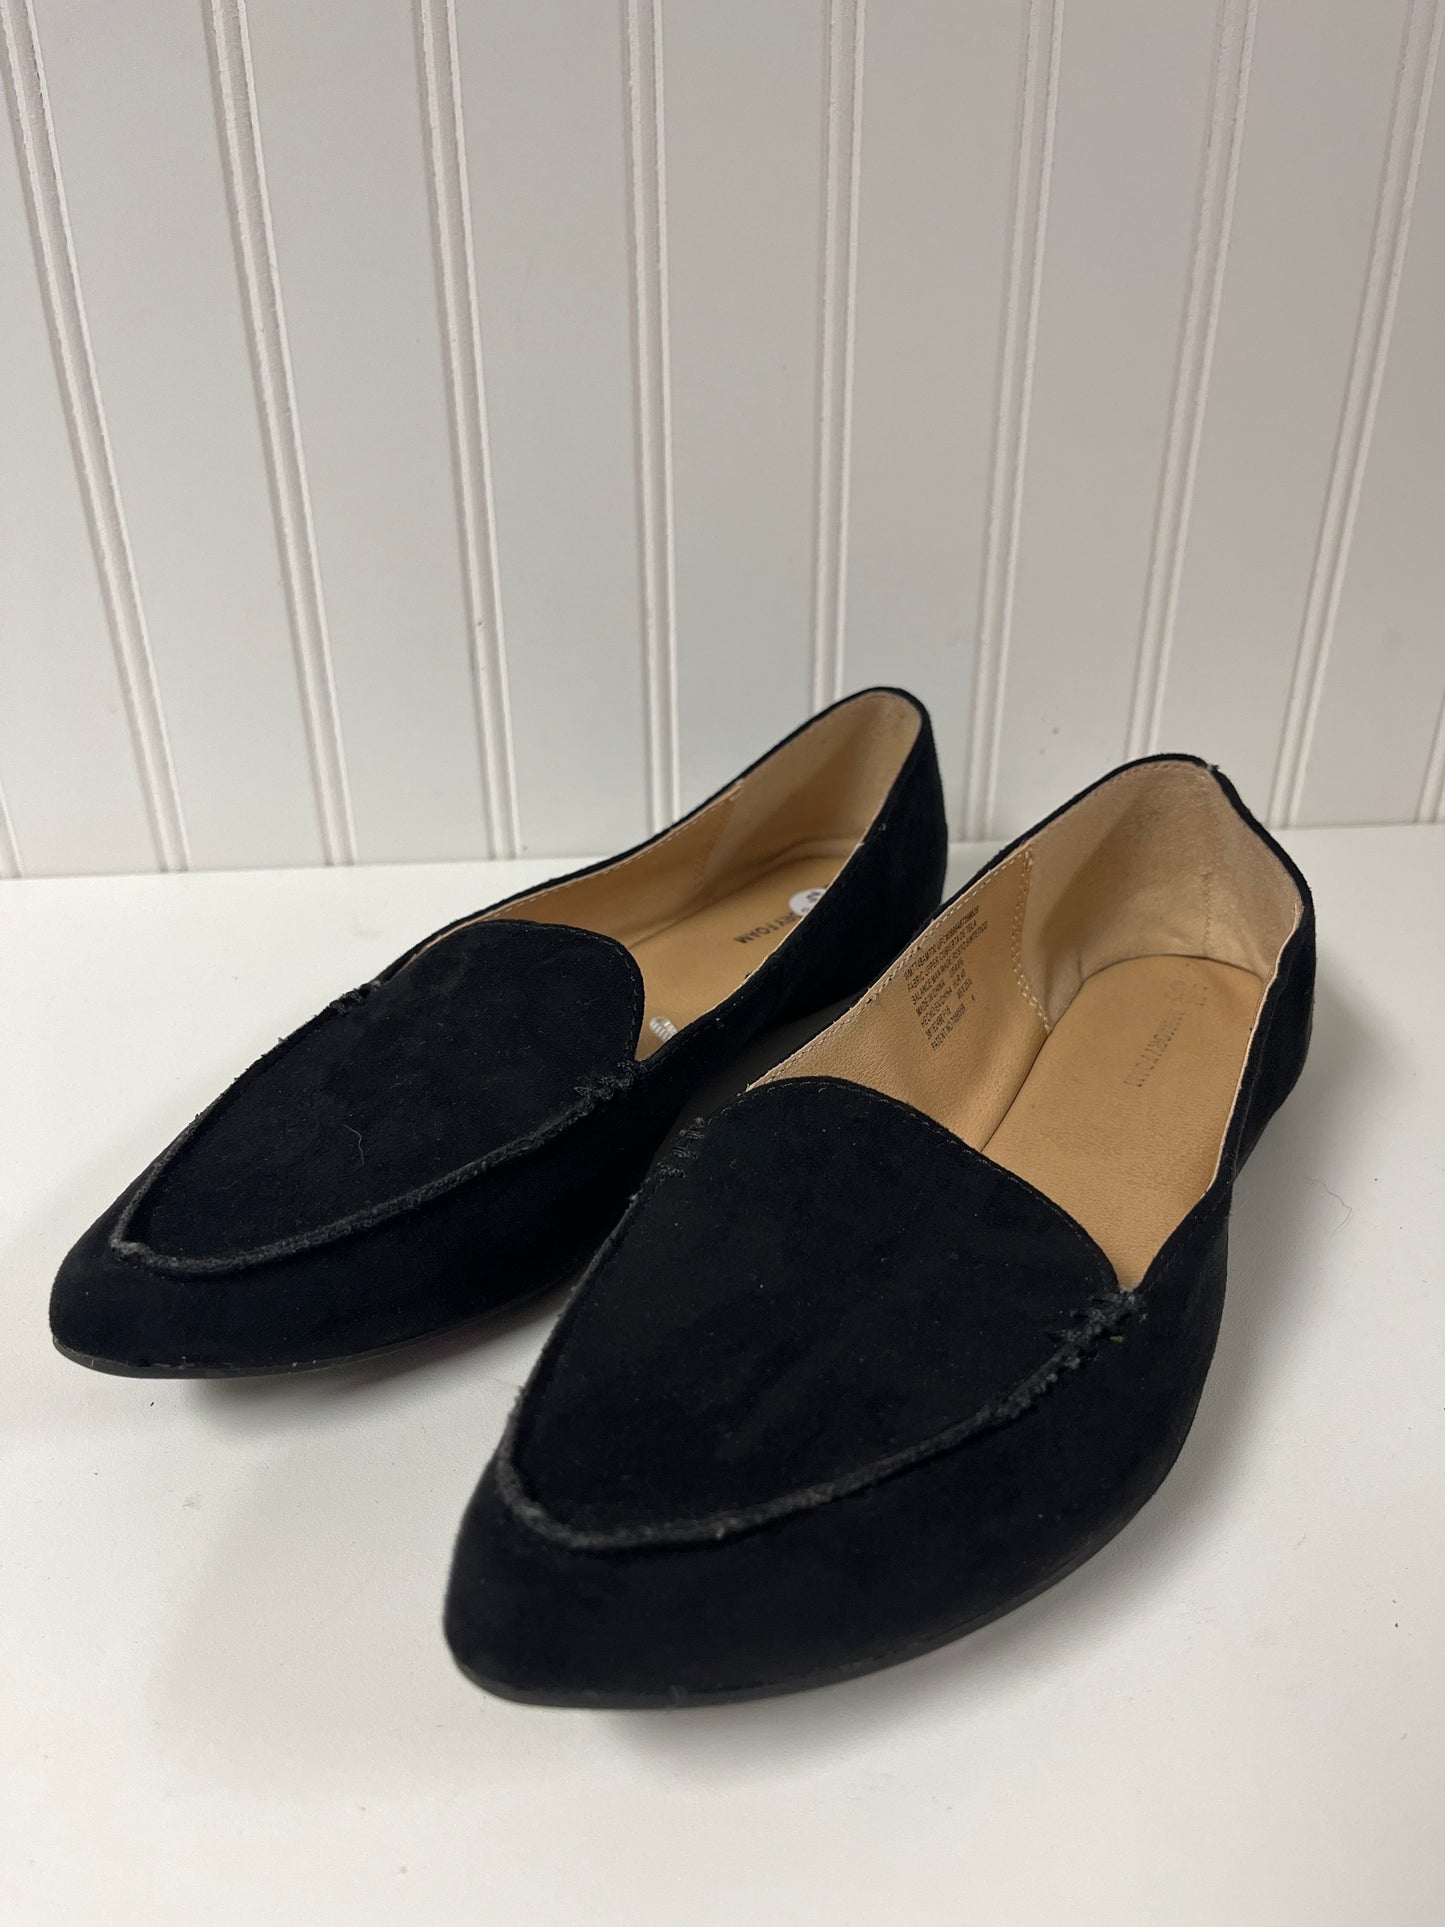 Black Shoes Flats Clothes Mentor, Size 8.5